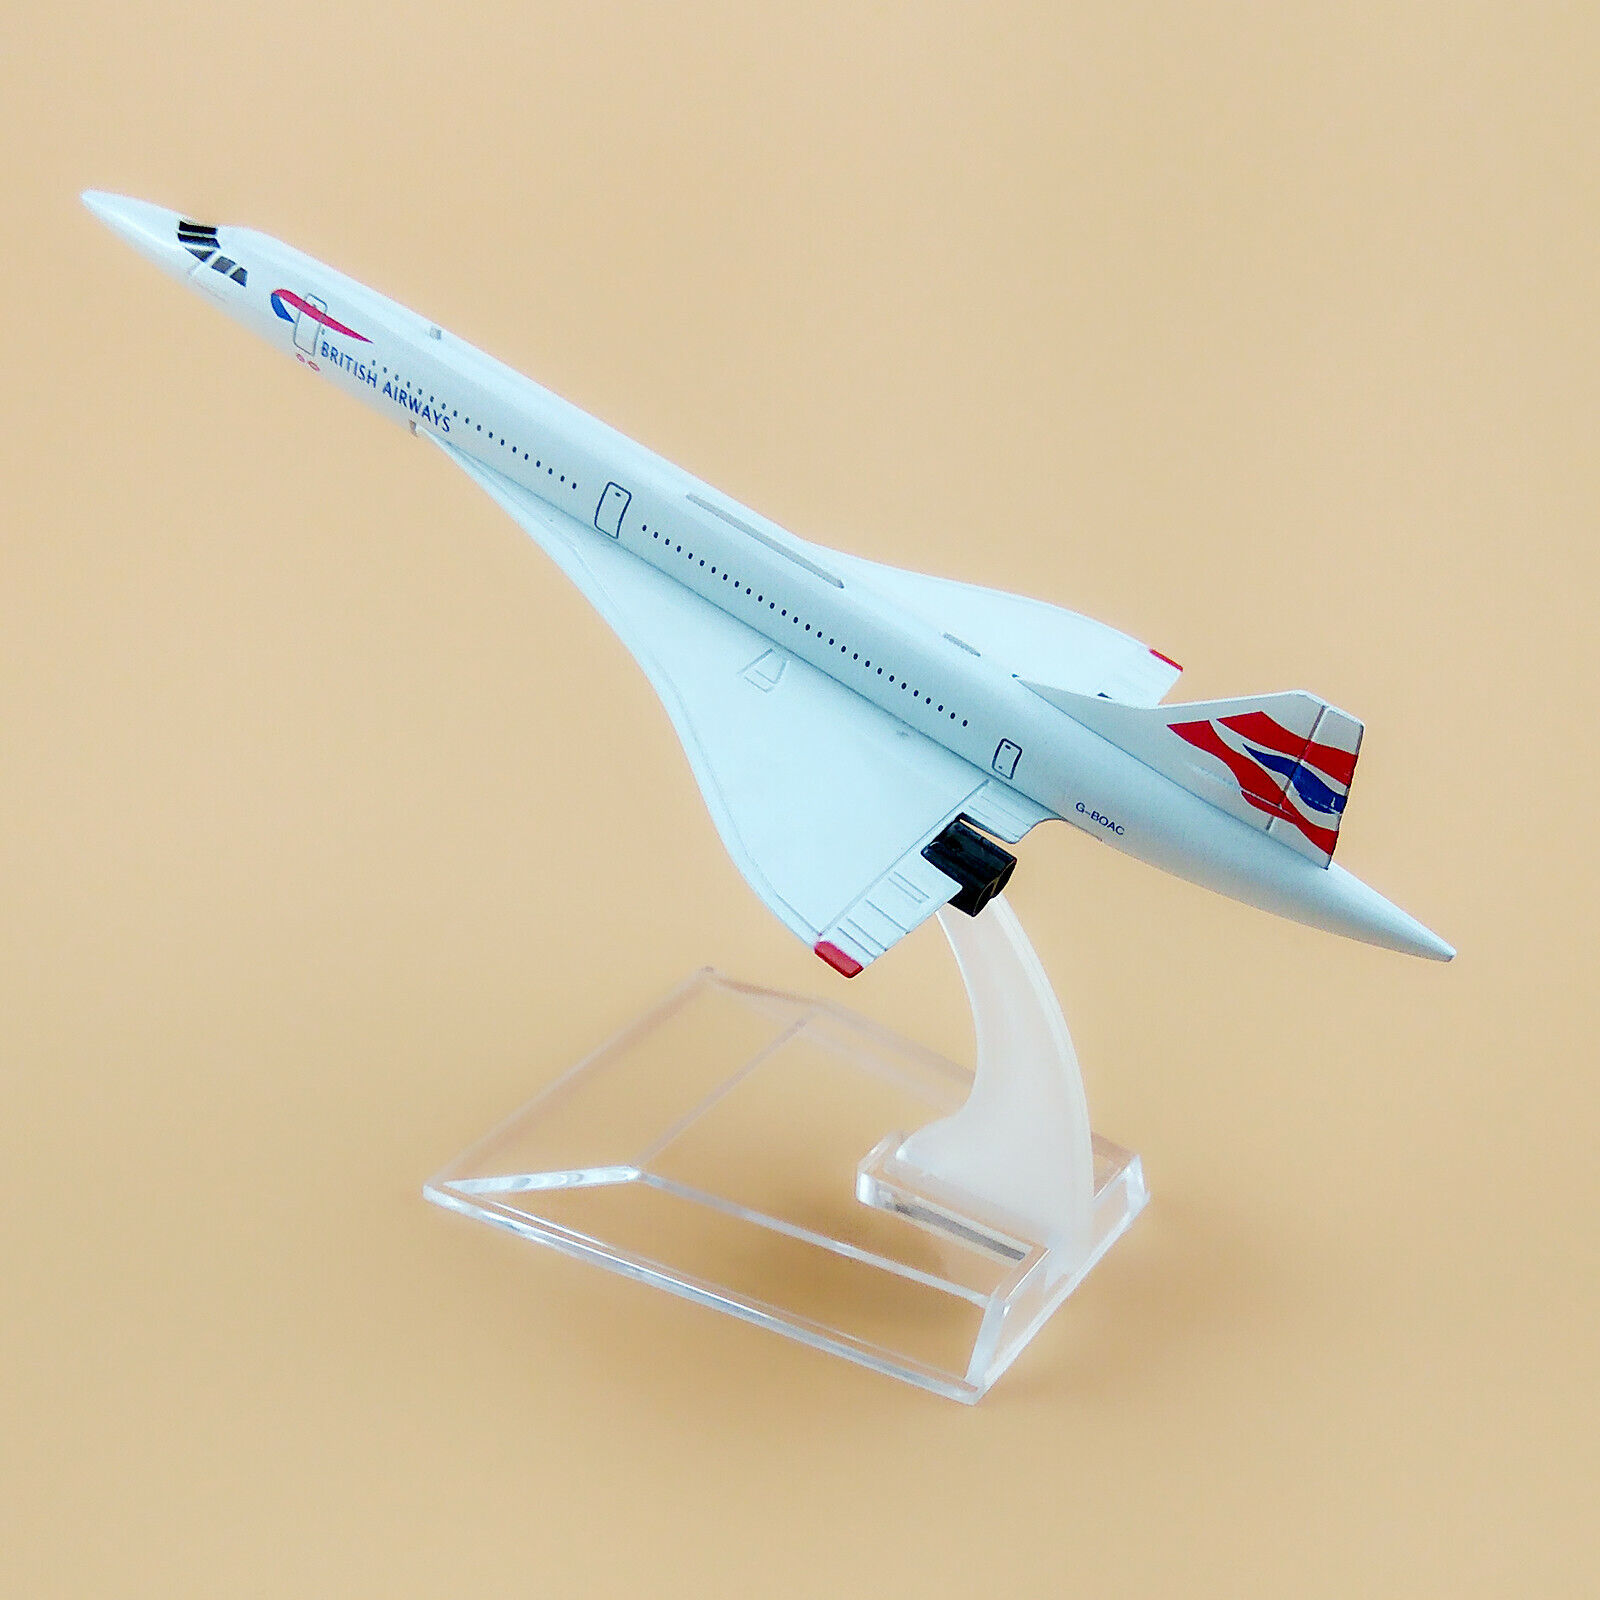 British Airways Concorde Costa Airlines Airplane Model Plane Metal Aircraft 16cm